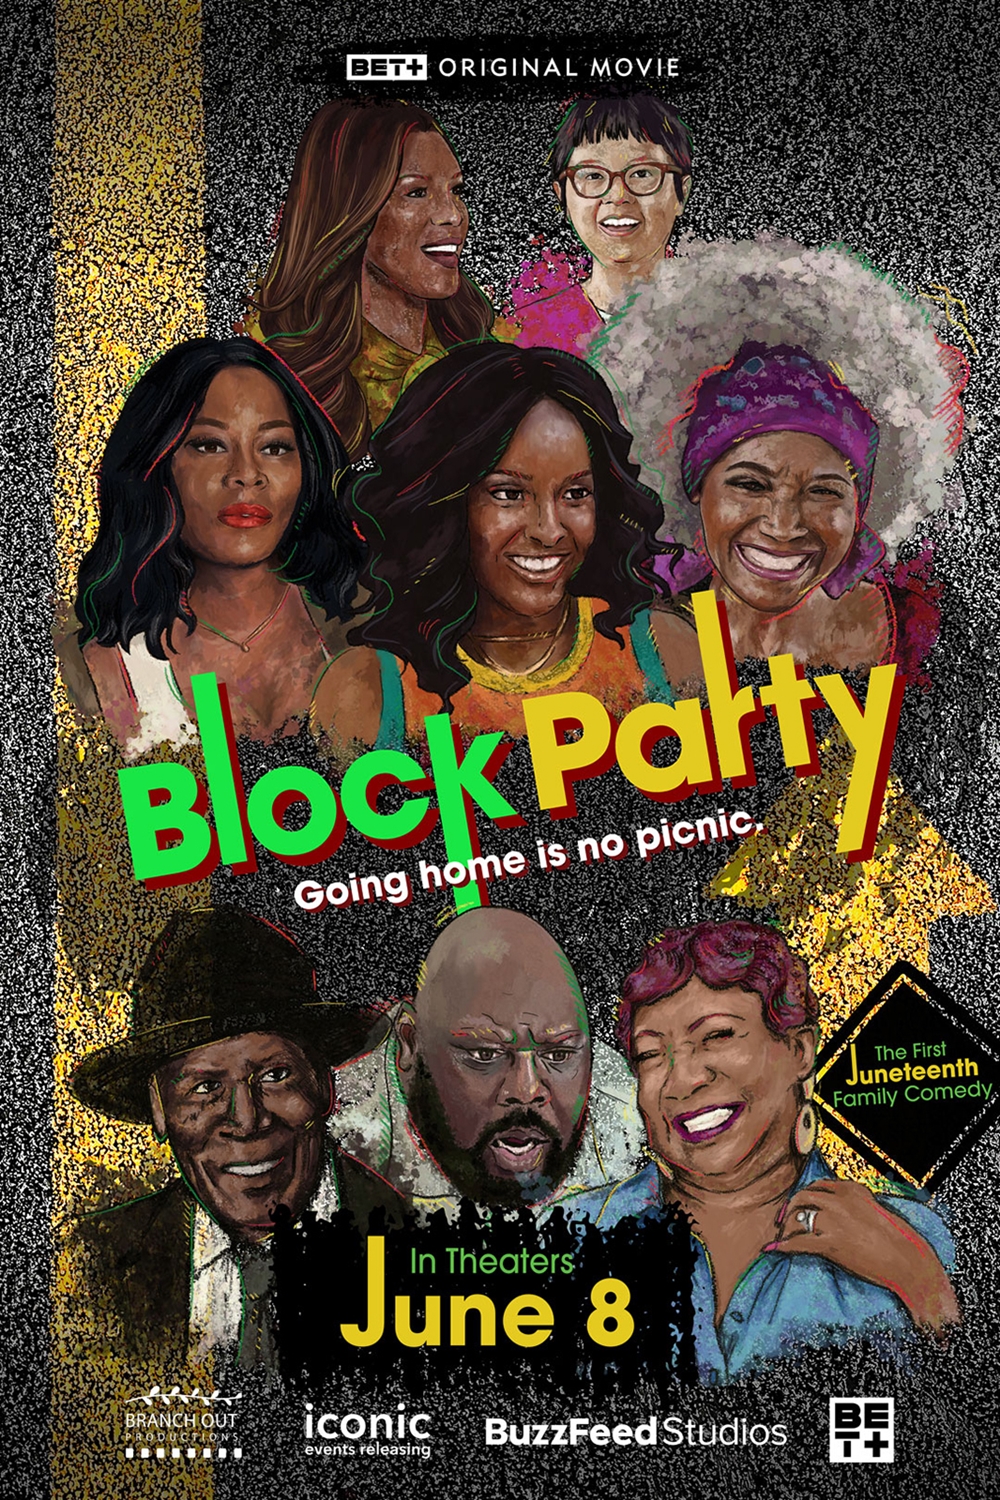     Block Party Juneteenth